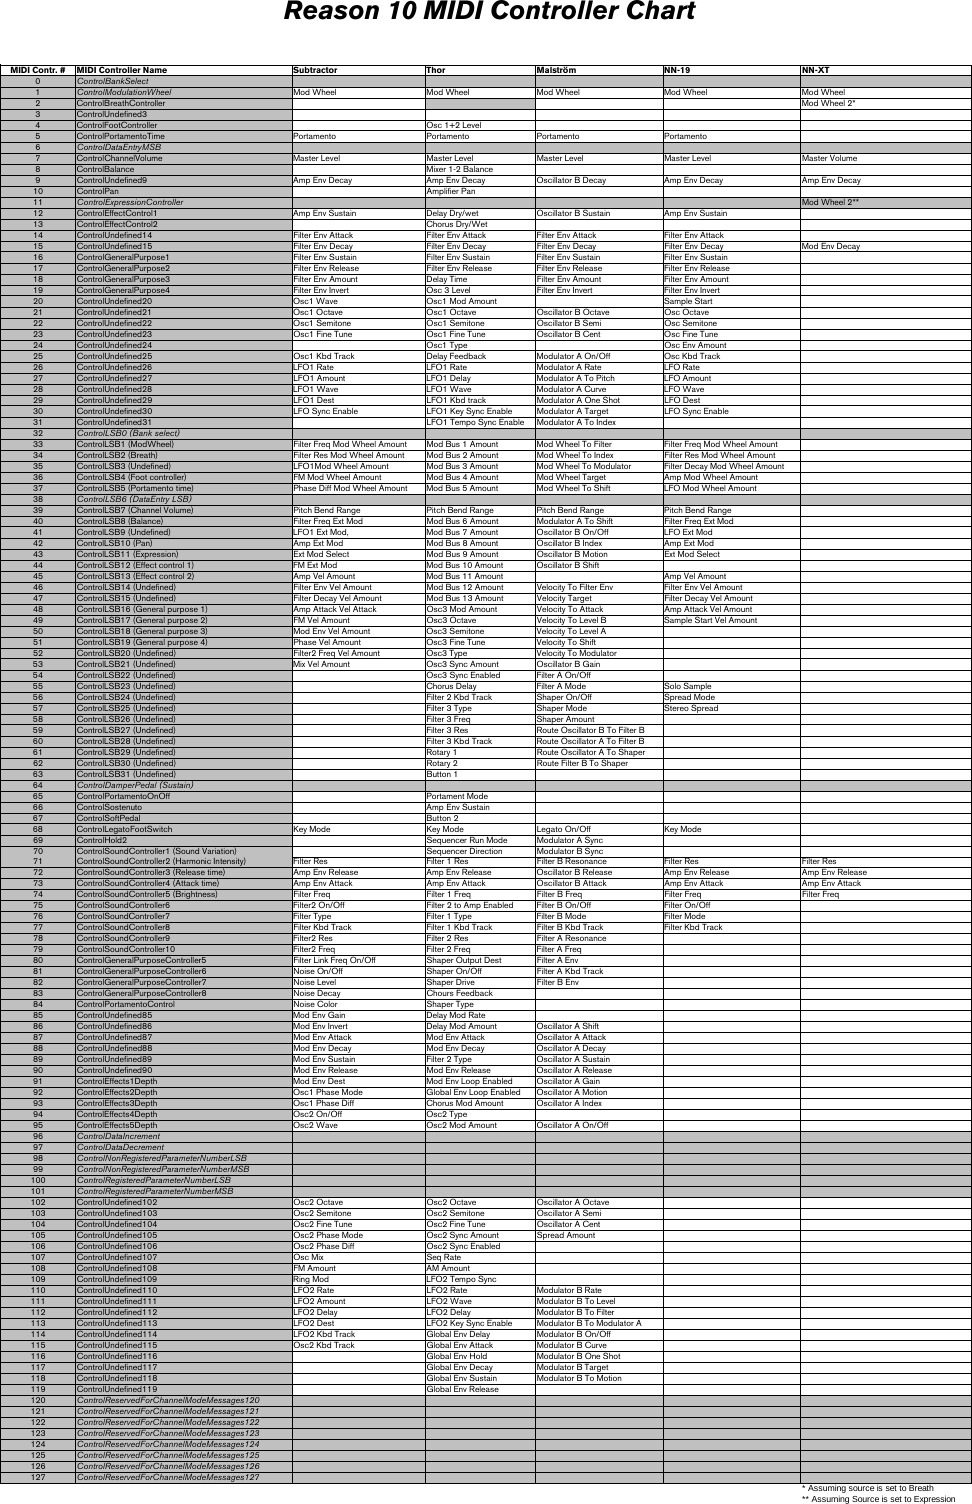 Page 5 of 9 - Reason 10 MIDI Implementation Chart - 10.0 EN